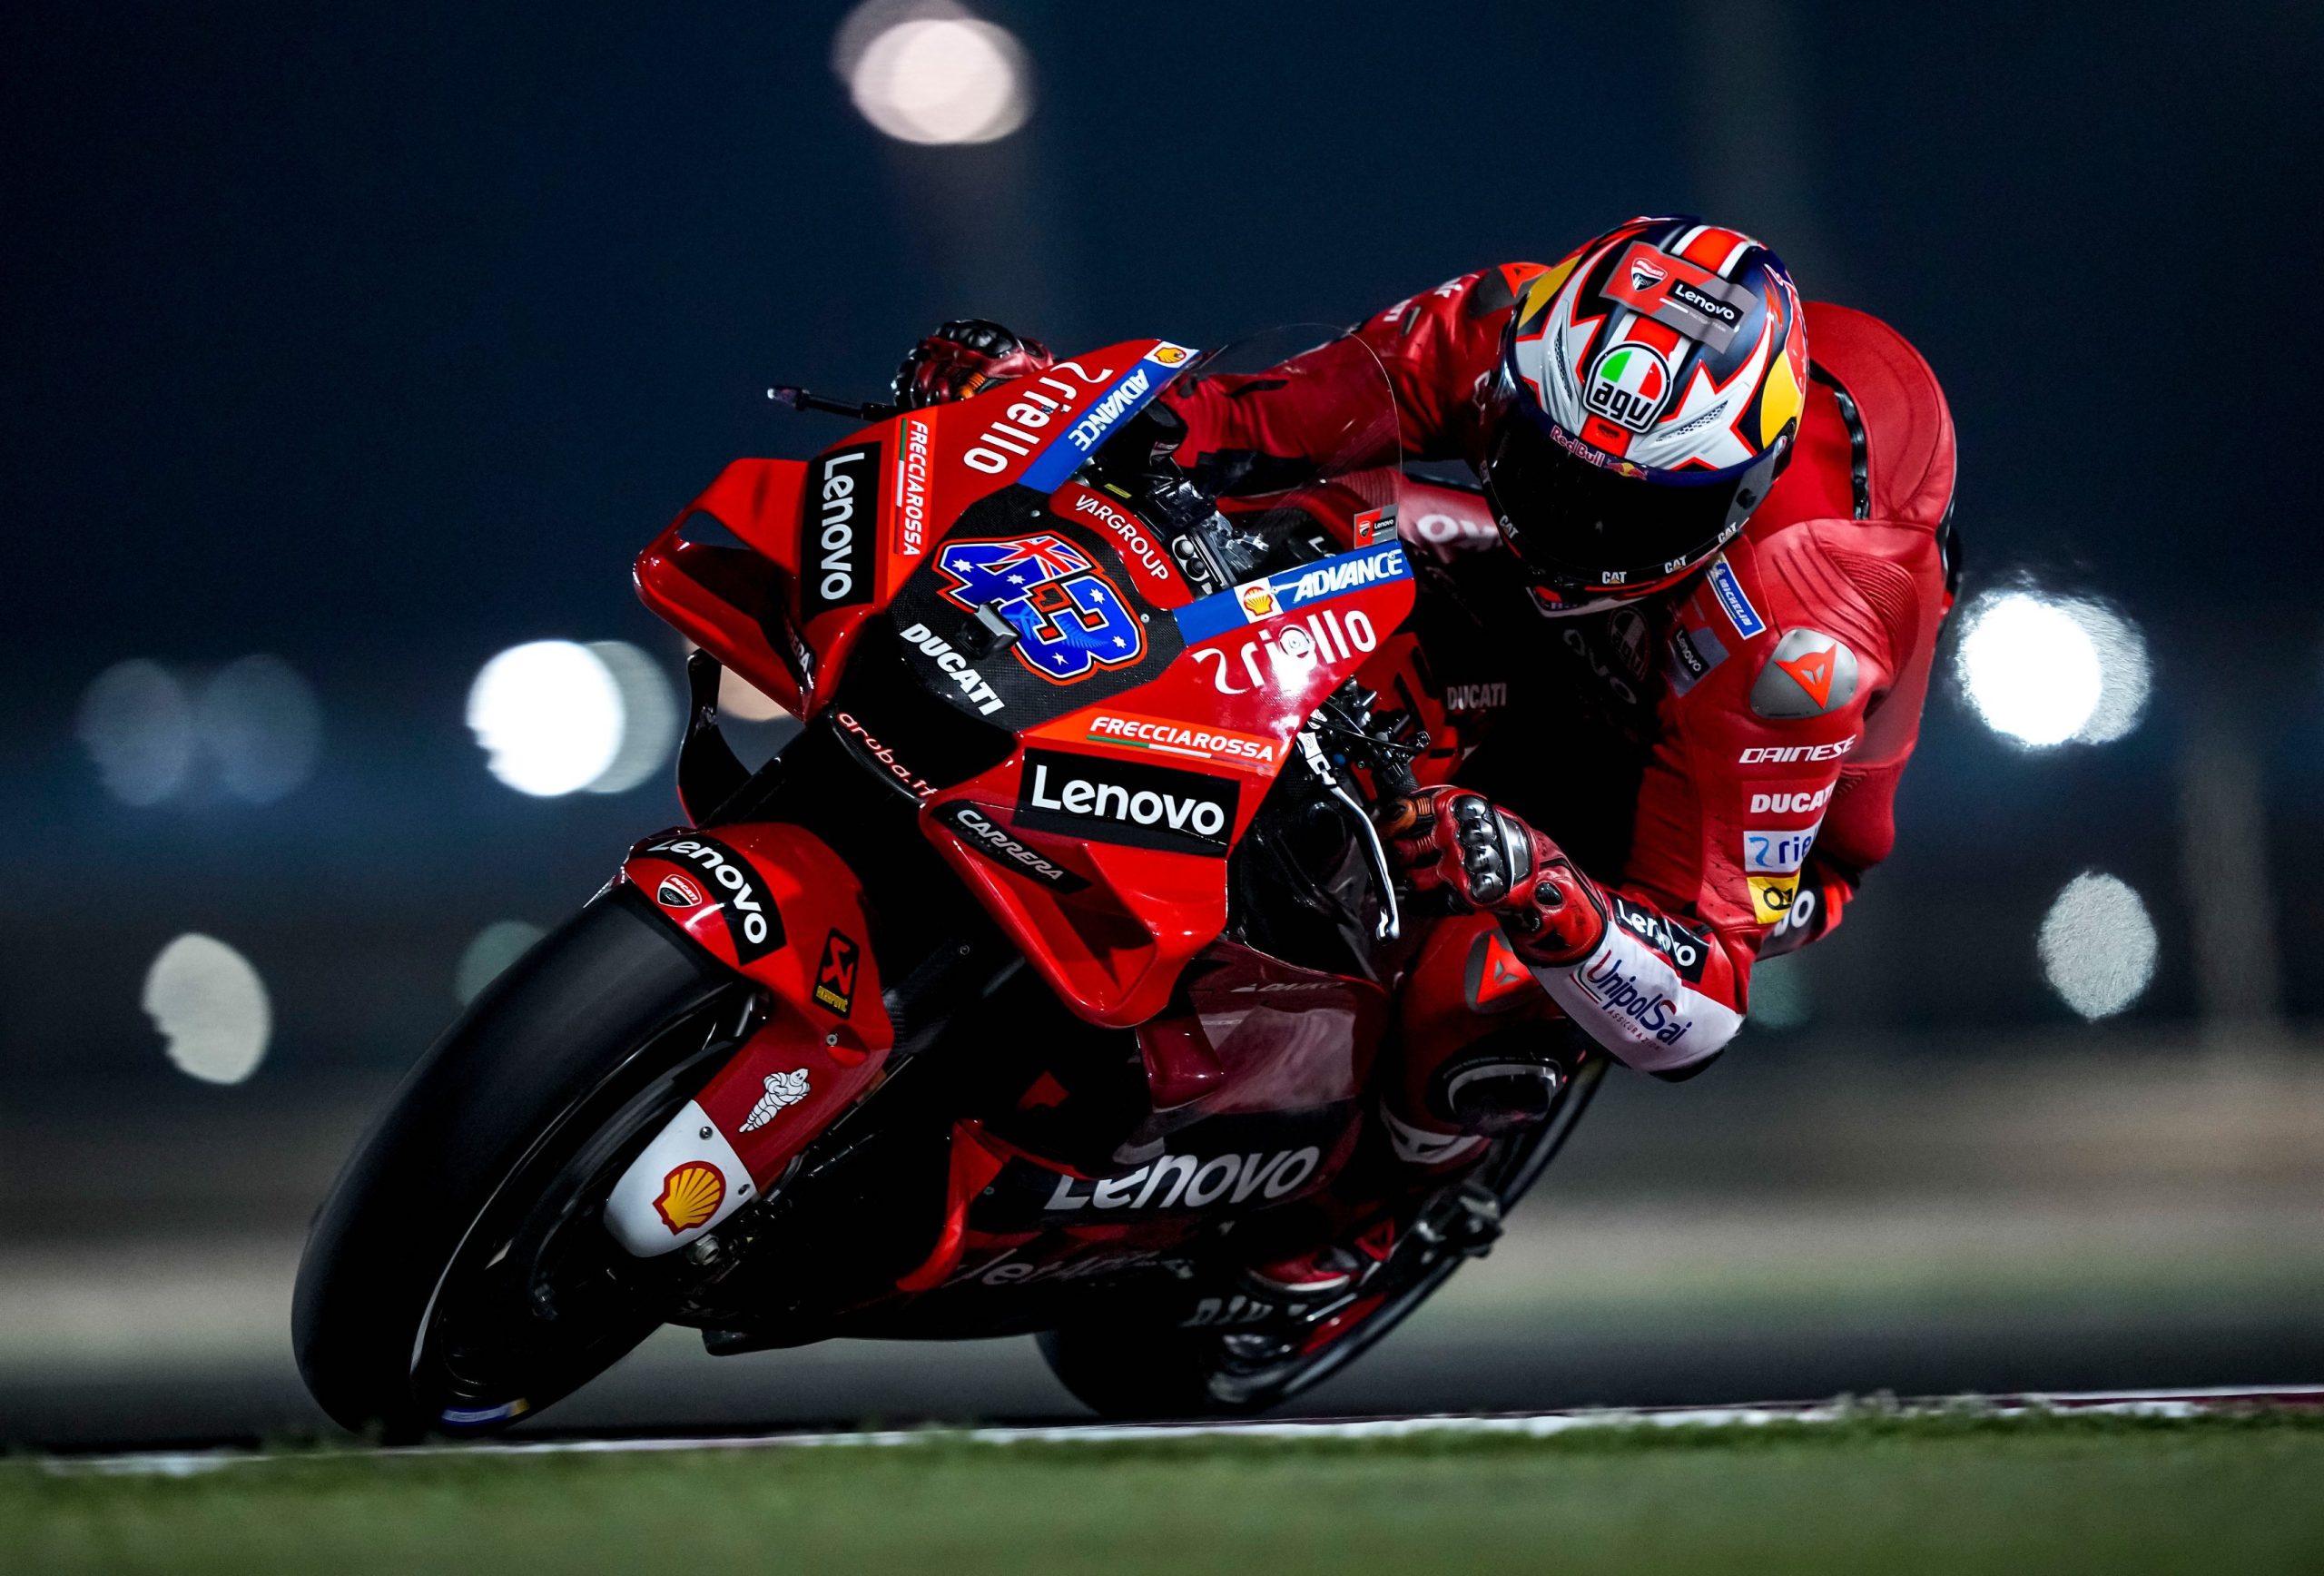 Roboze helps Ducati Lenovo develop new challenger for 2022 MotoGP season